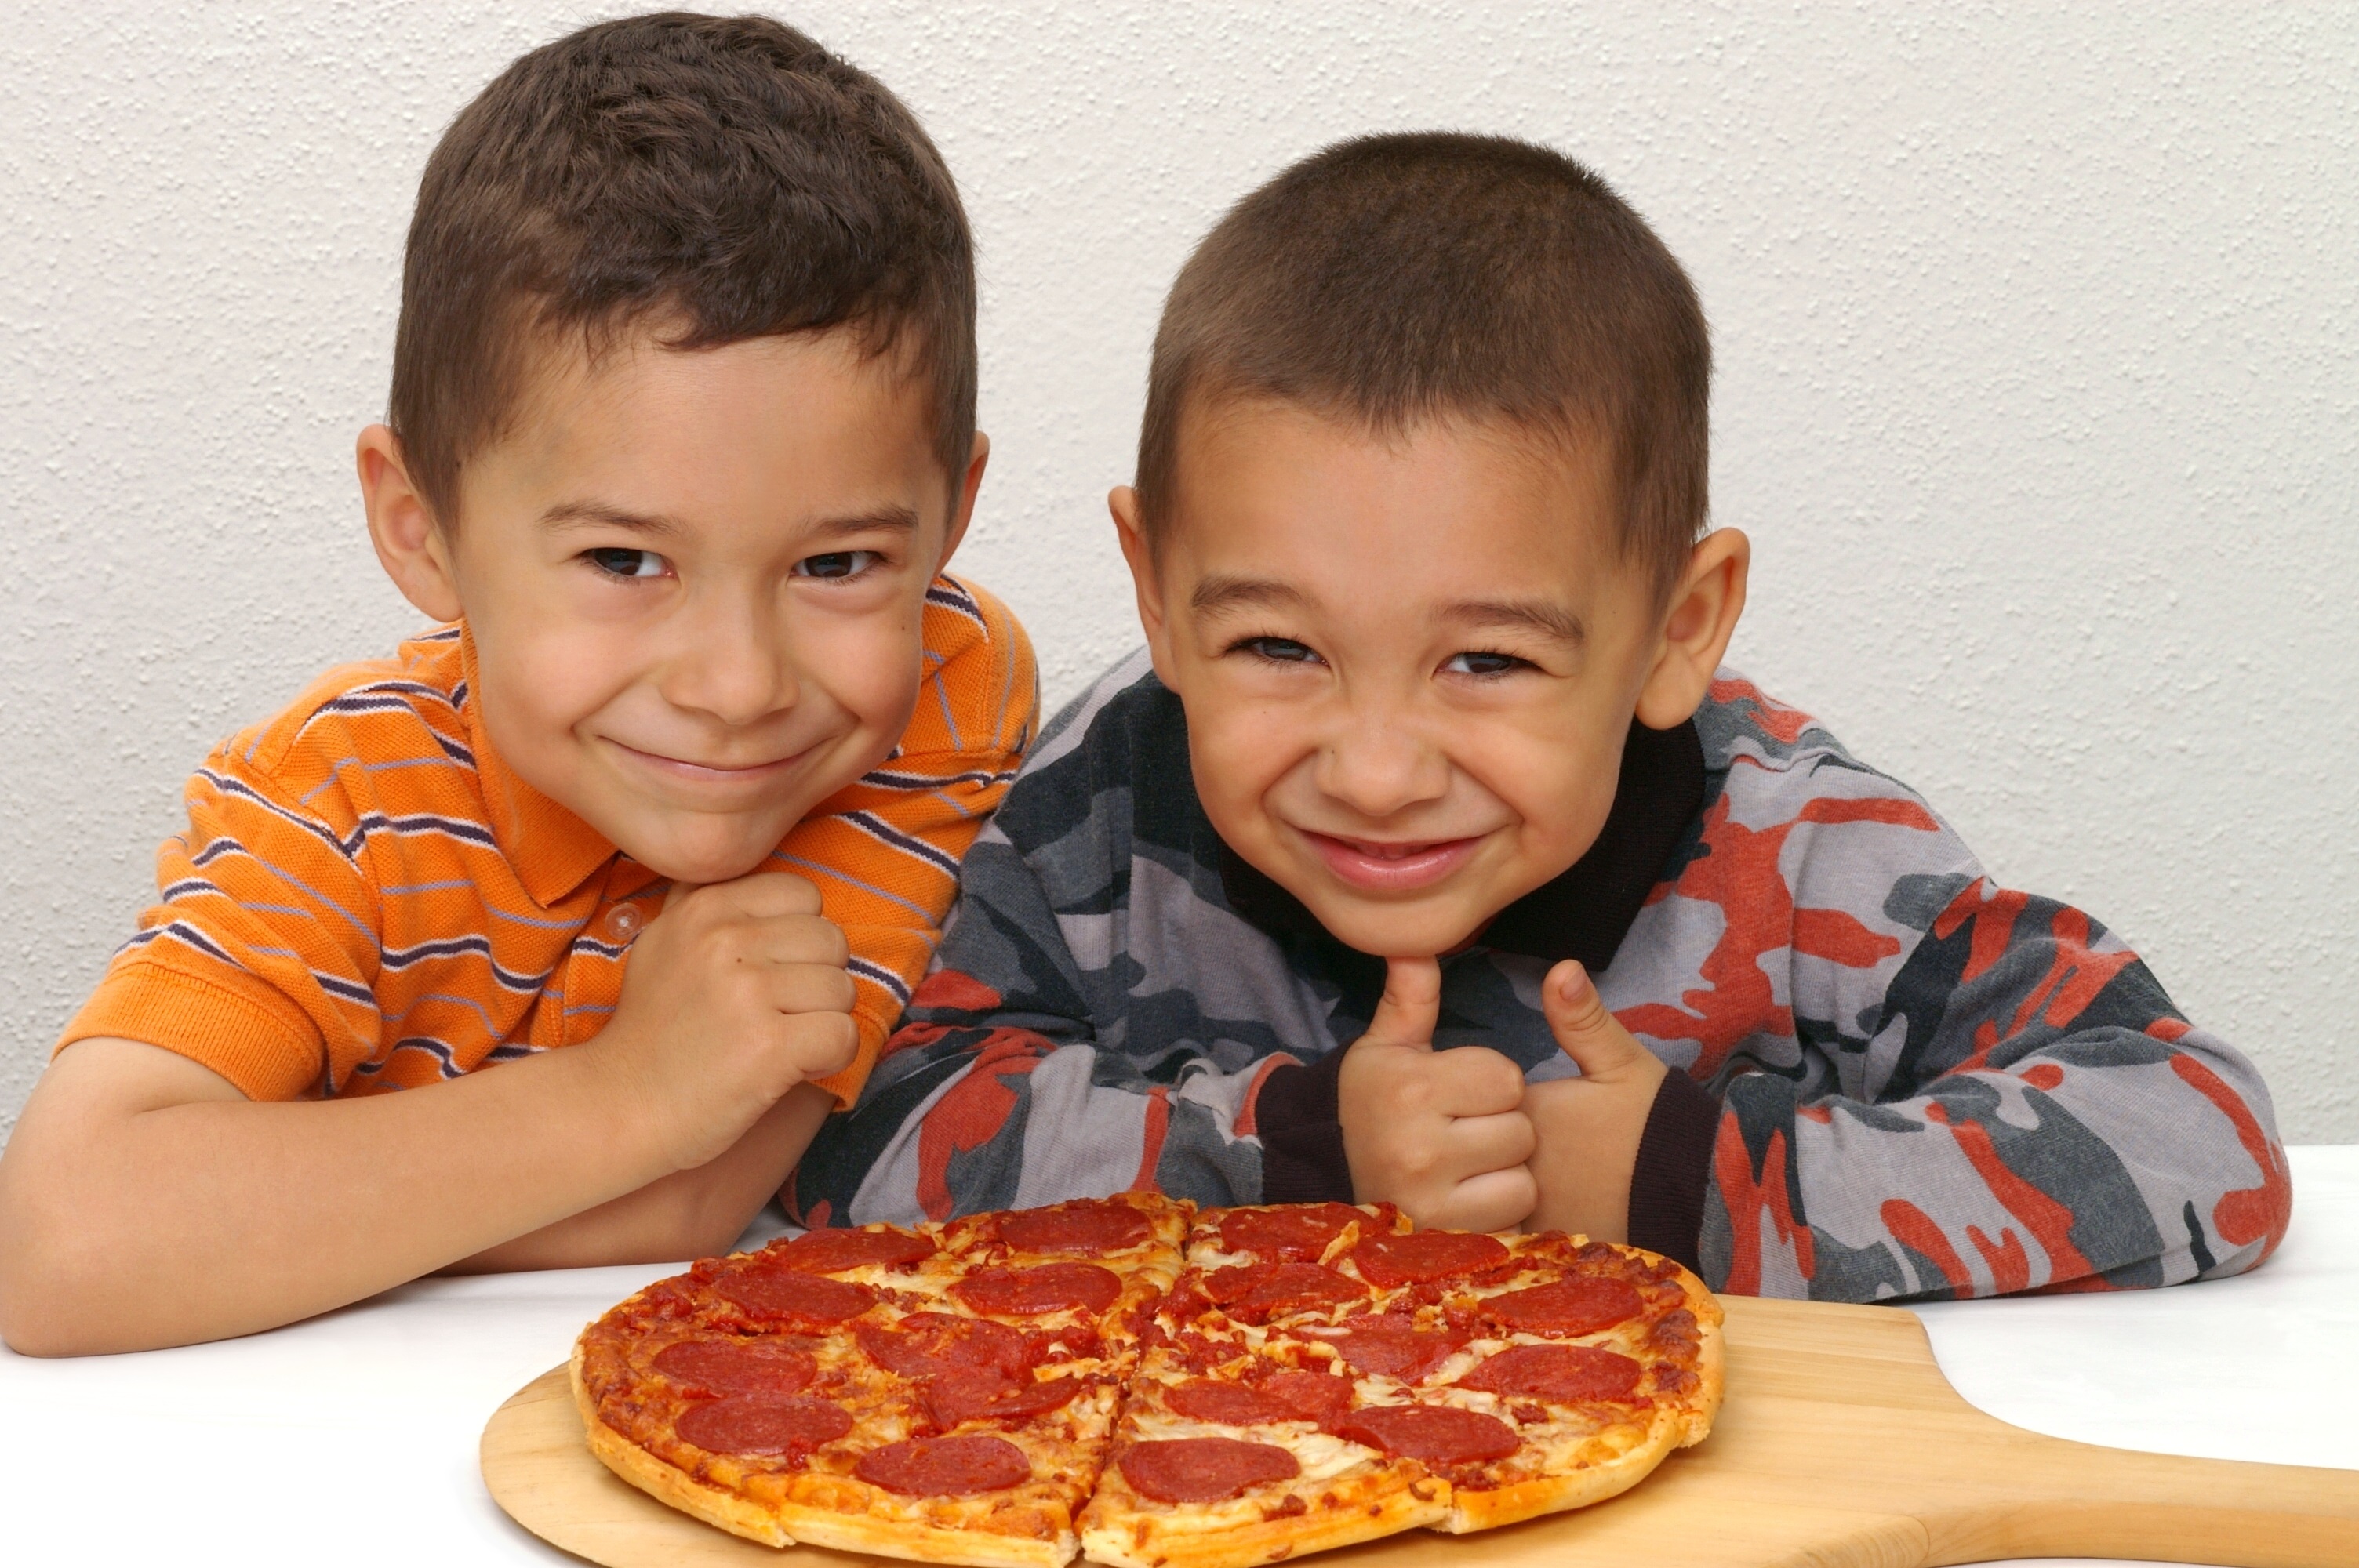 Children enjoying pizza